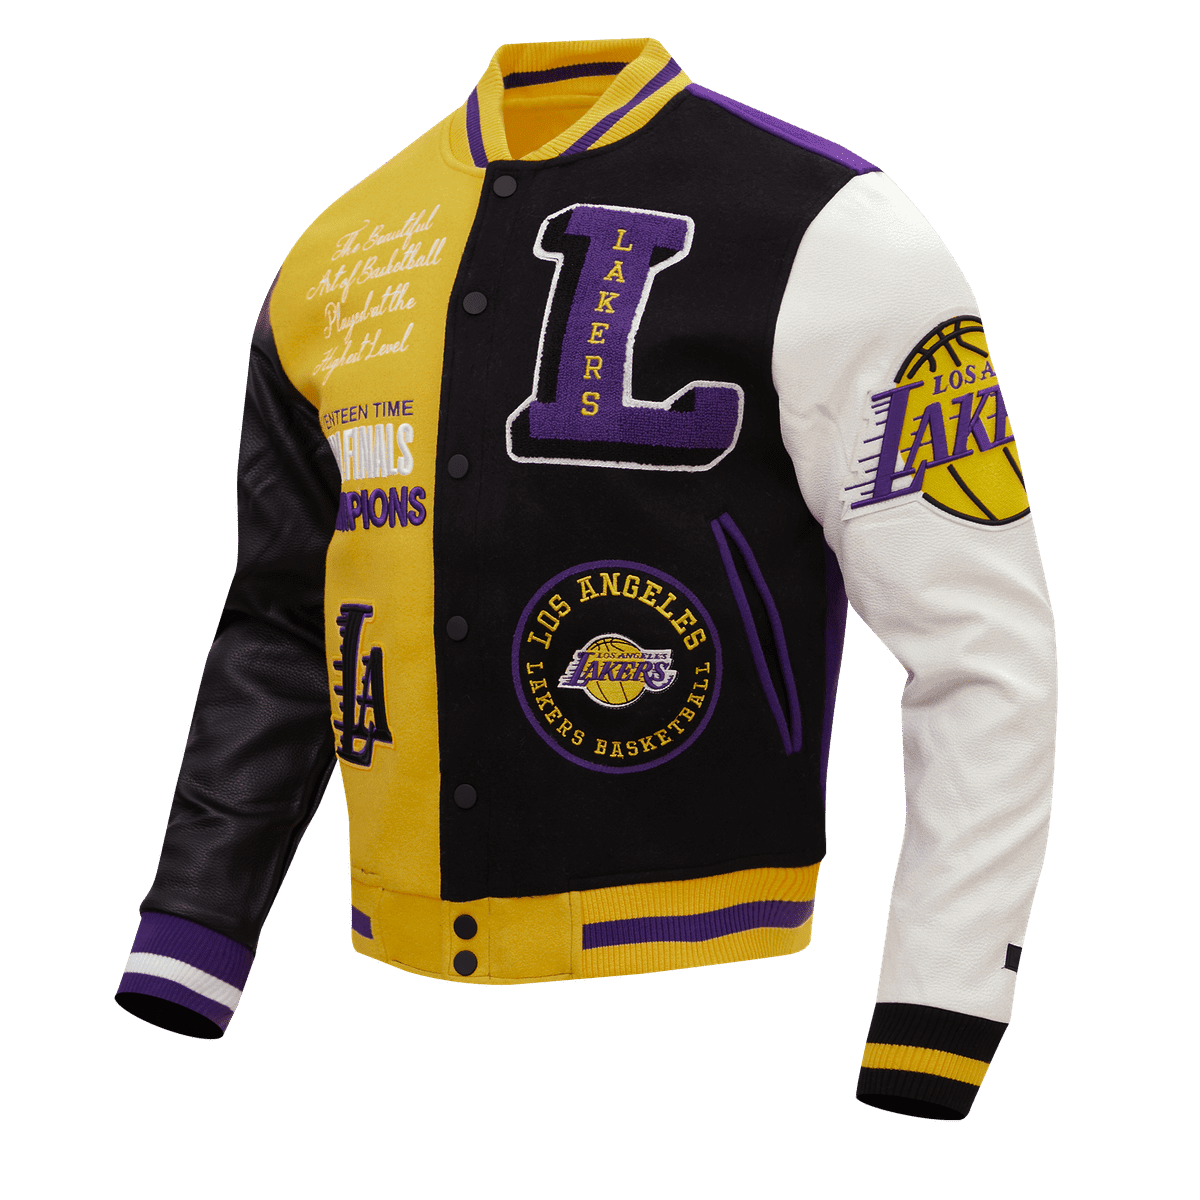 Los Angeles Lakers 16x Bomber Jacket